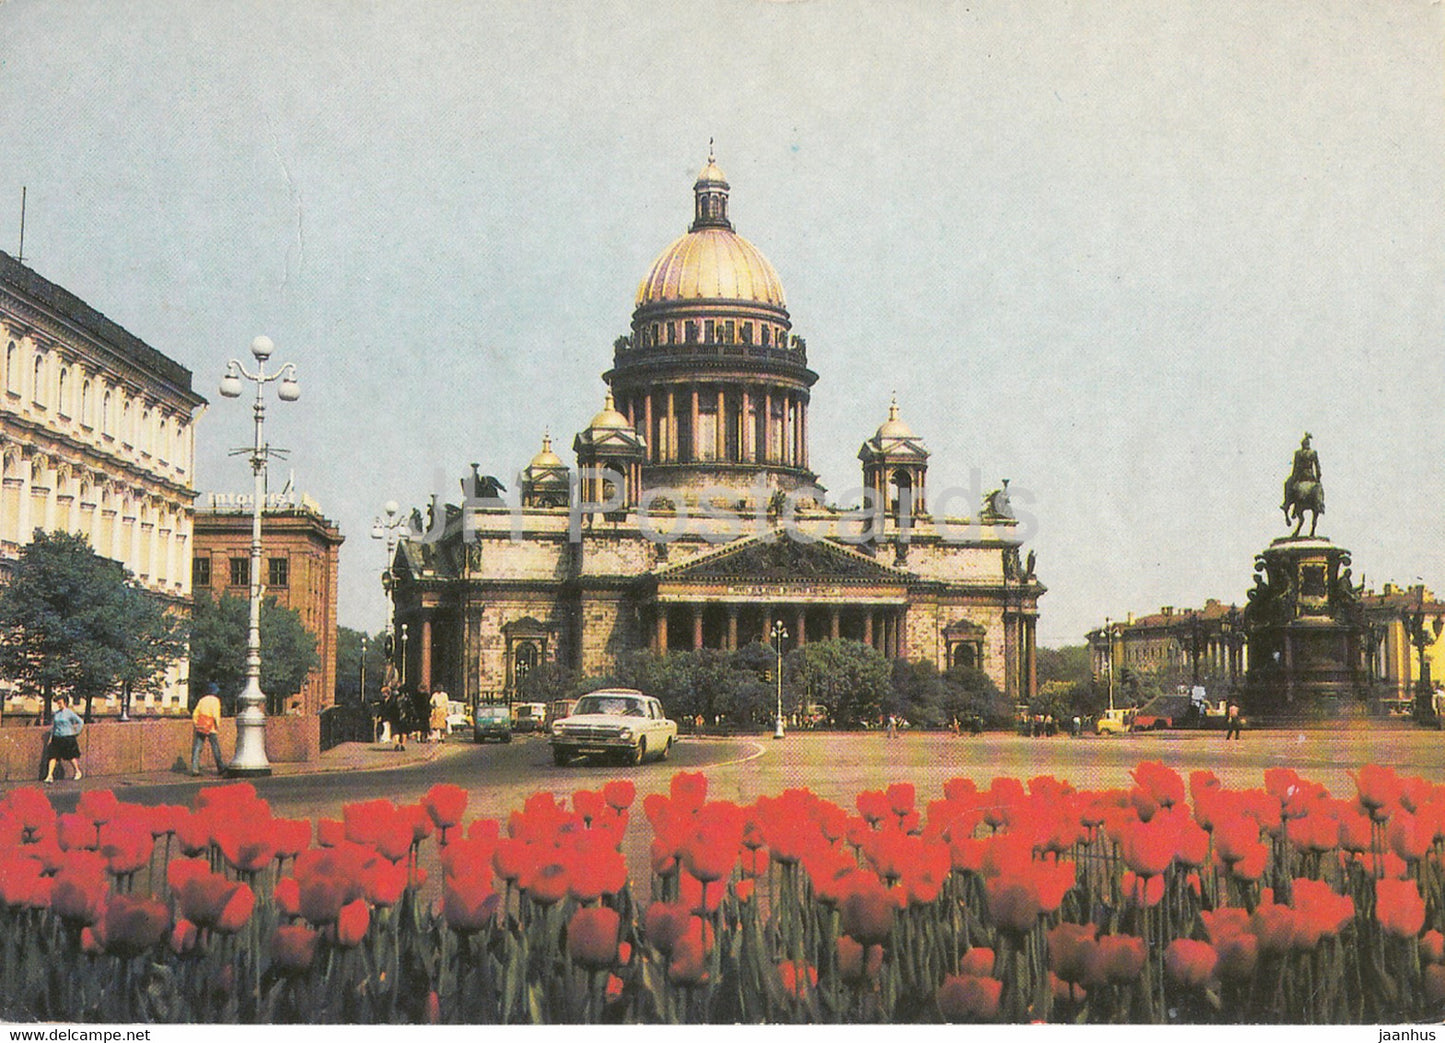 Leningrad - St Petersburg - Saint Isaac's Cathedral - car Volga - postal stationery - 1984 - Russia USSR - used - JH Postcards